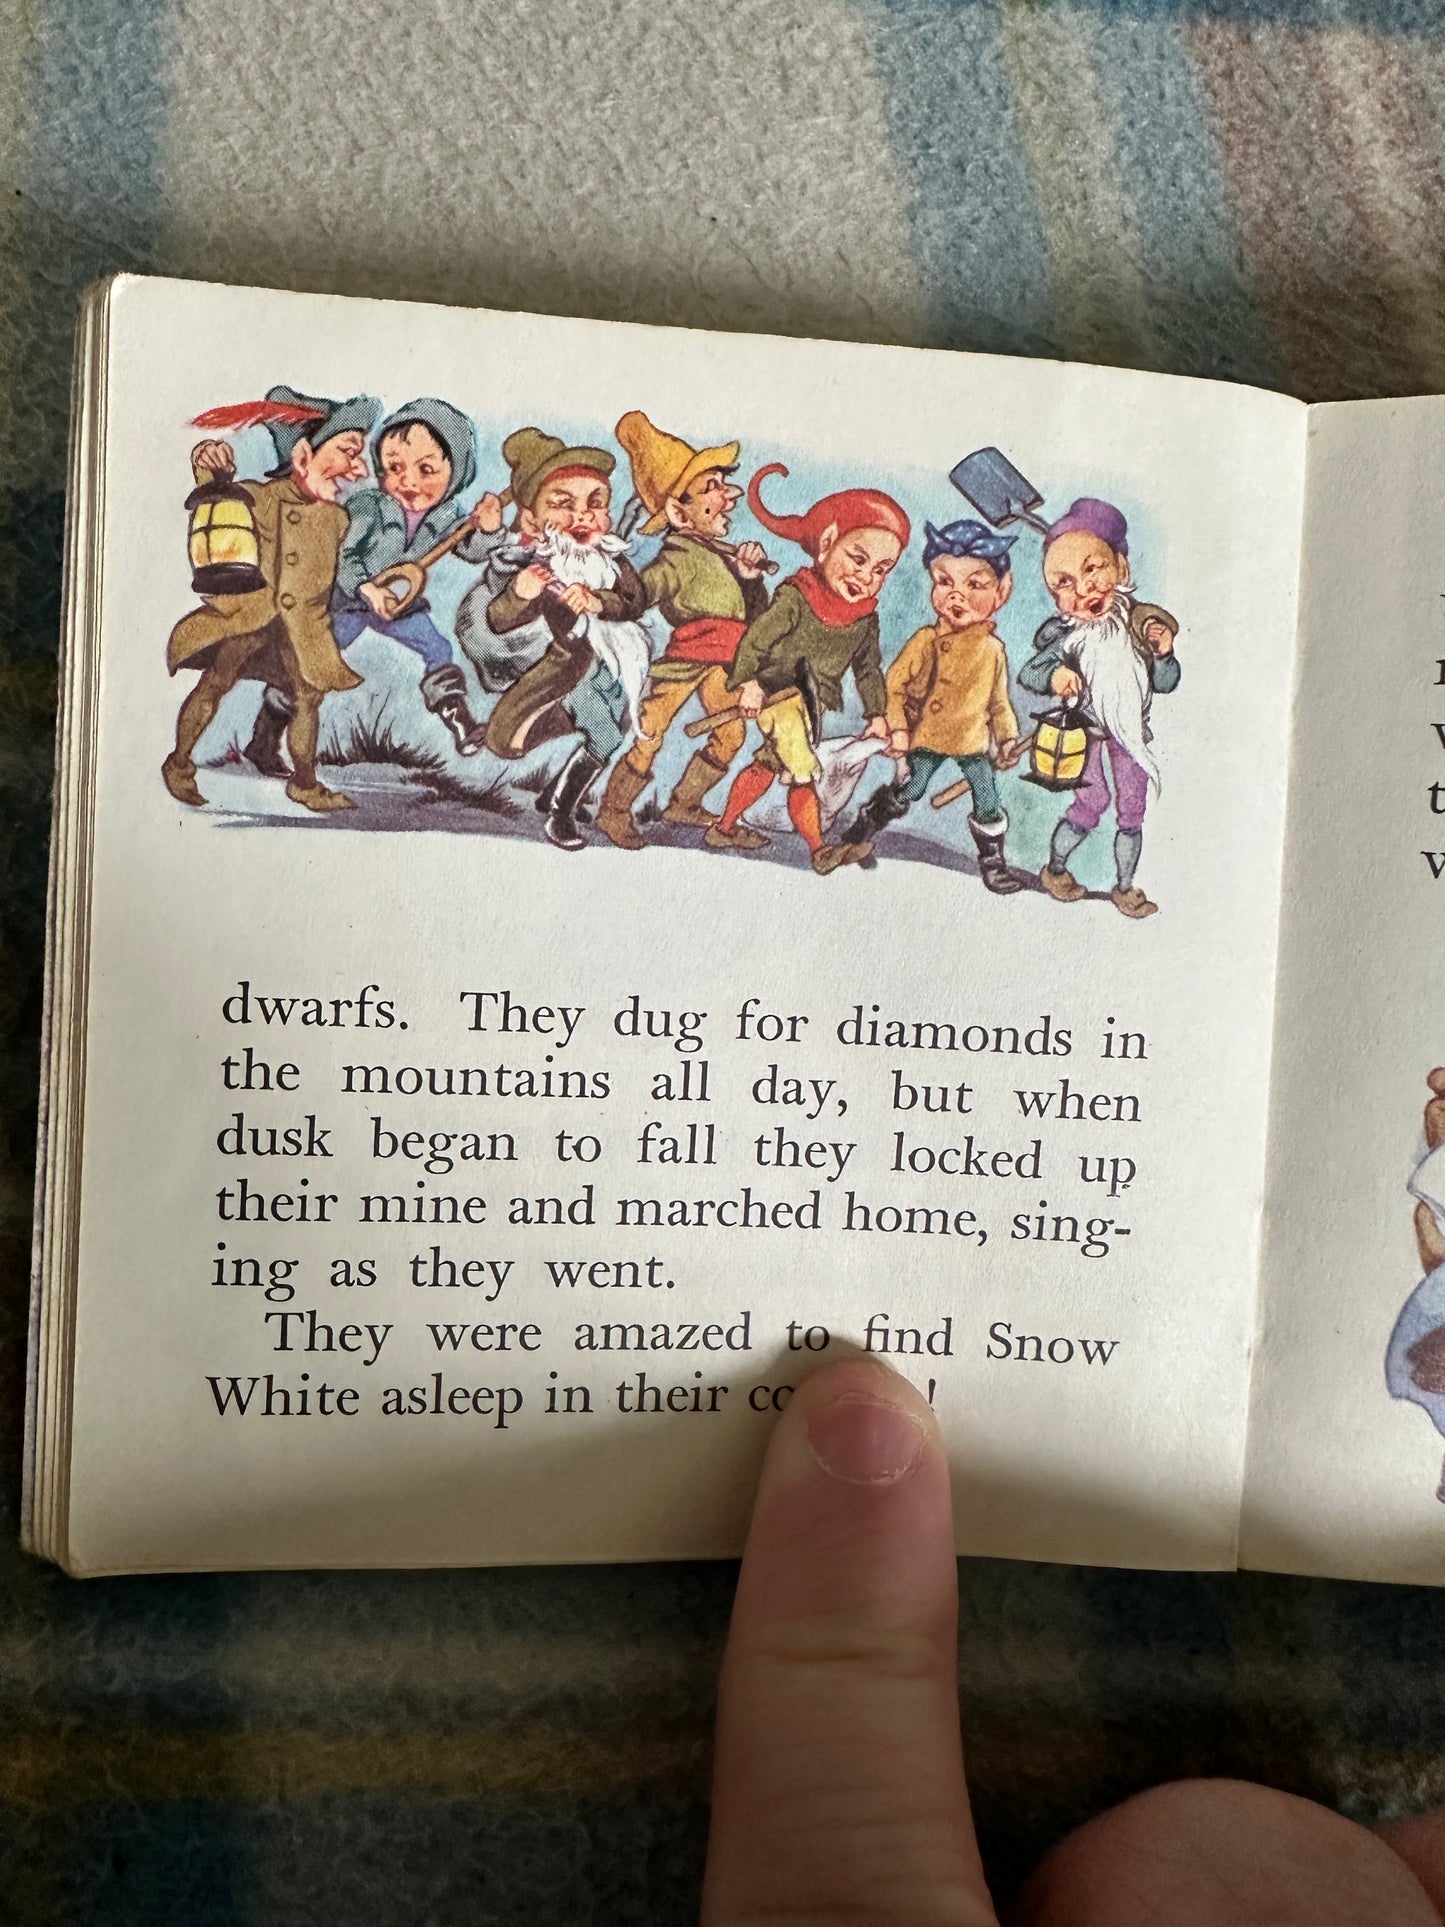 1950’s Snow White & The Seven Dwarfs (Pixie Book)- Rene Cloke(Collins)